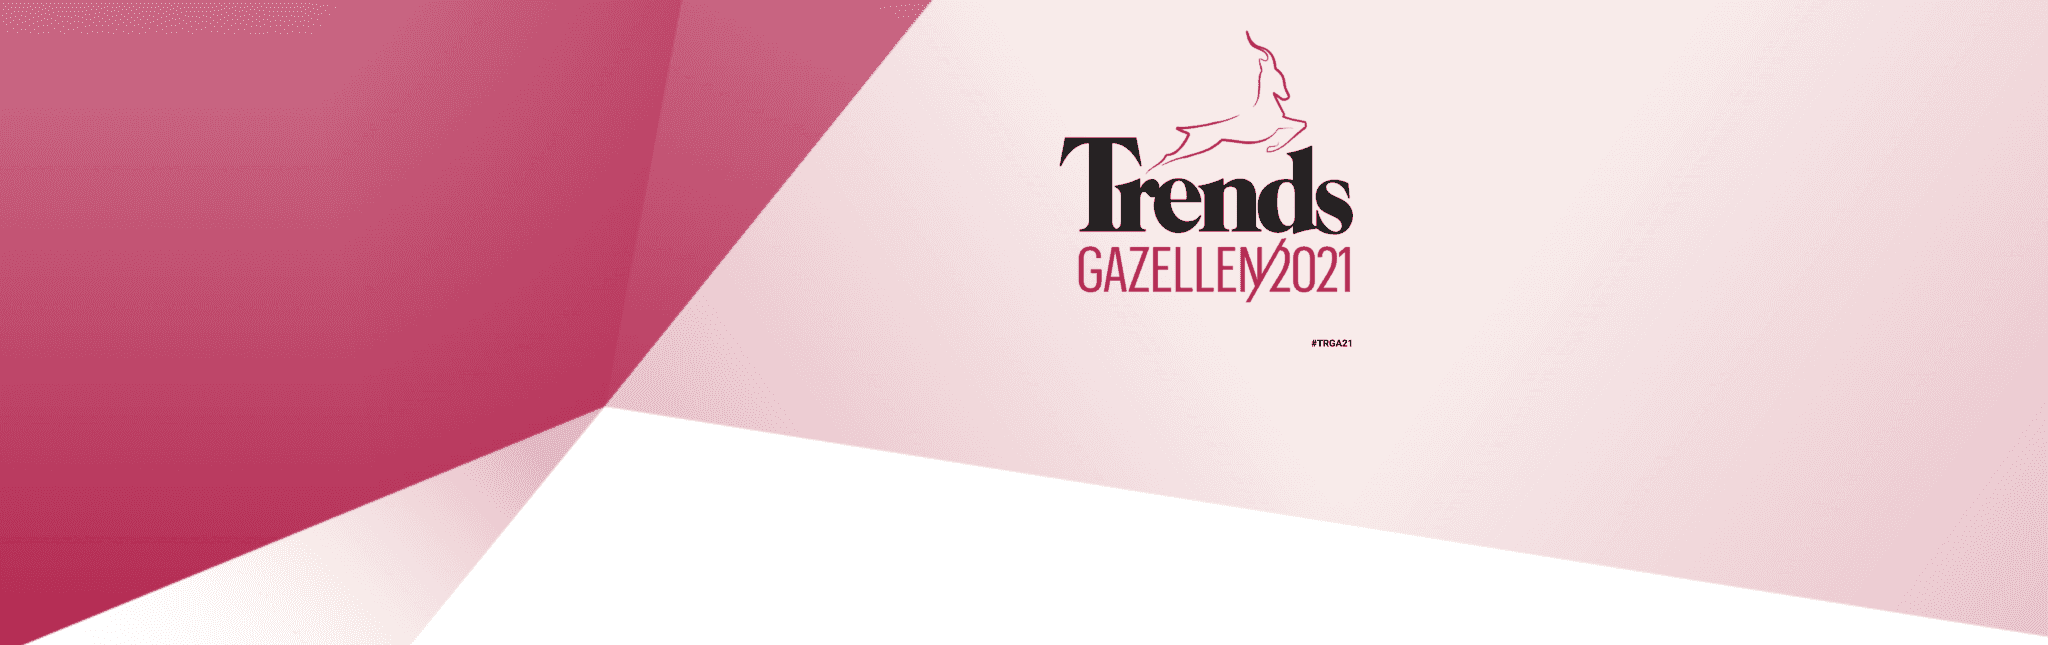 Trends Gazellen banner